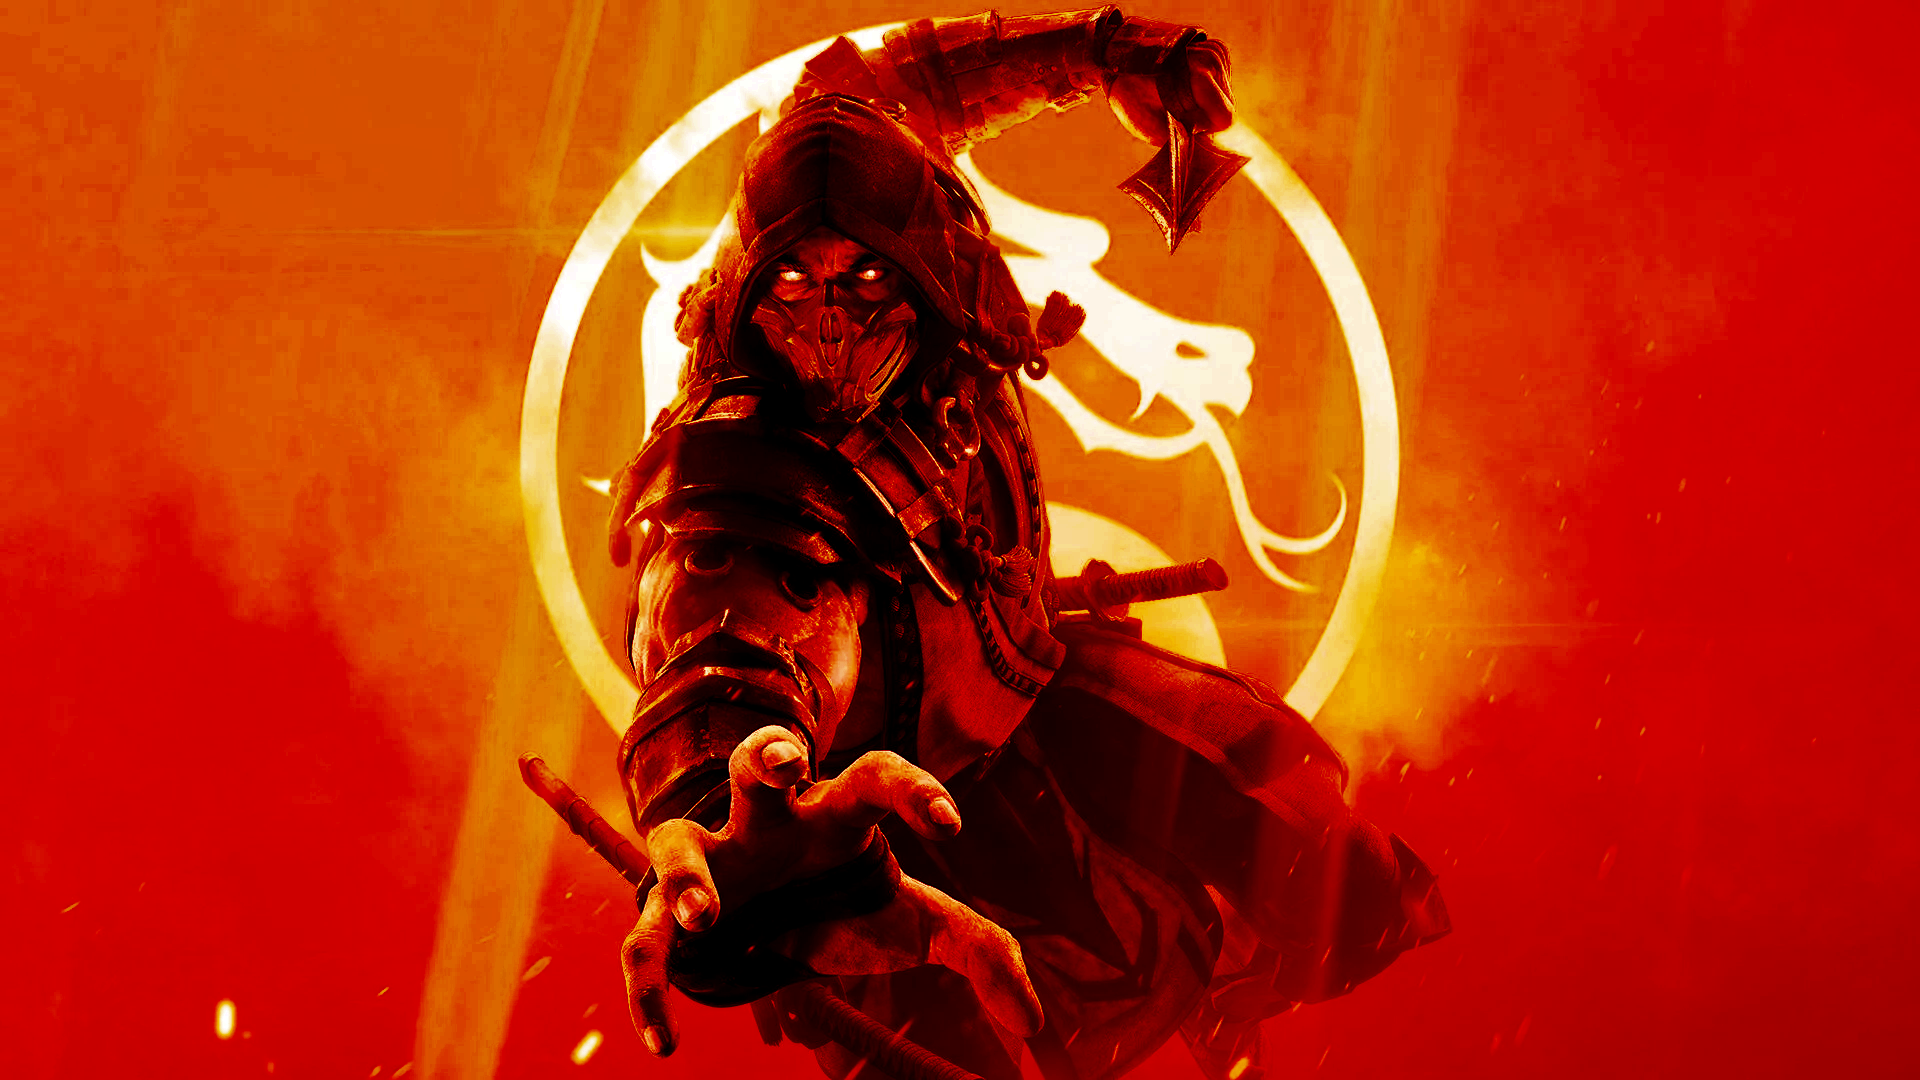 Mortal Kombat 11 HD Wallpapers Free Download  PixelsTalkNet